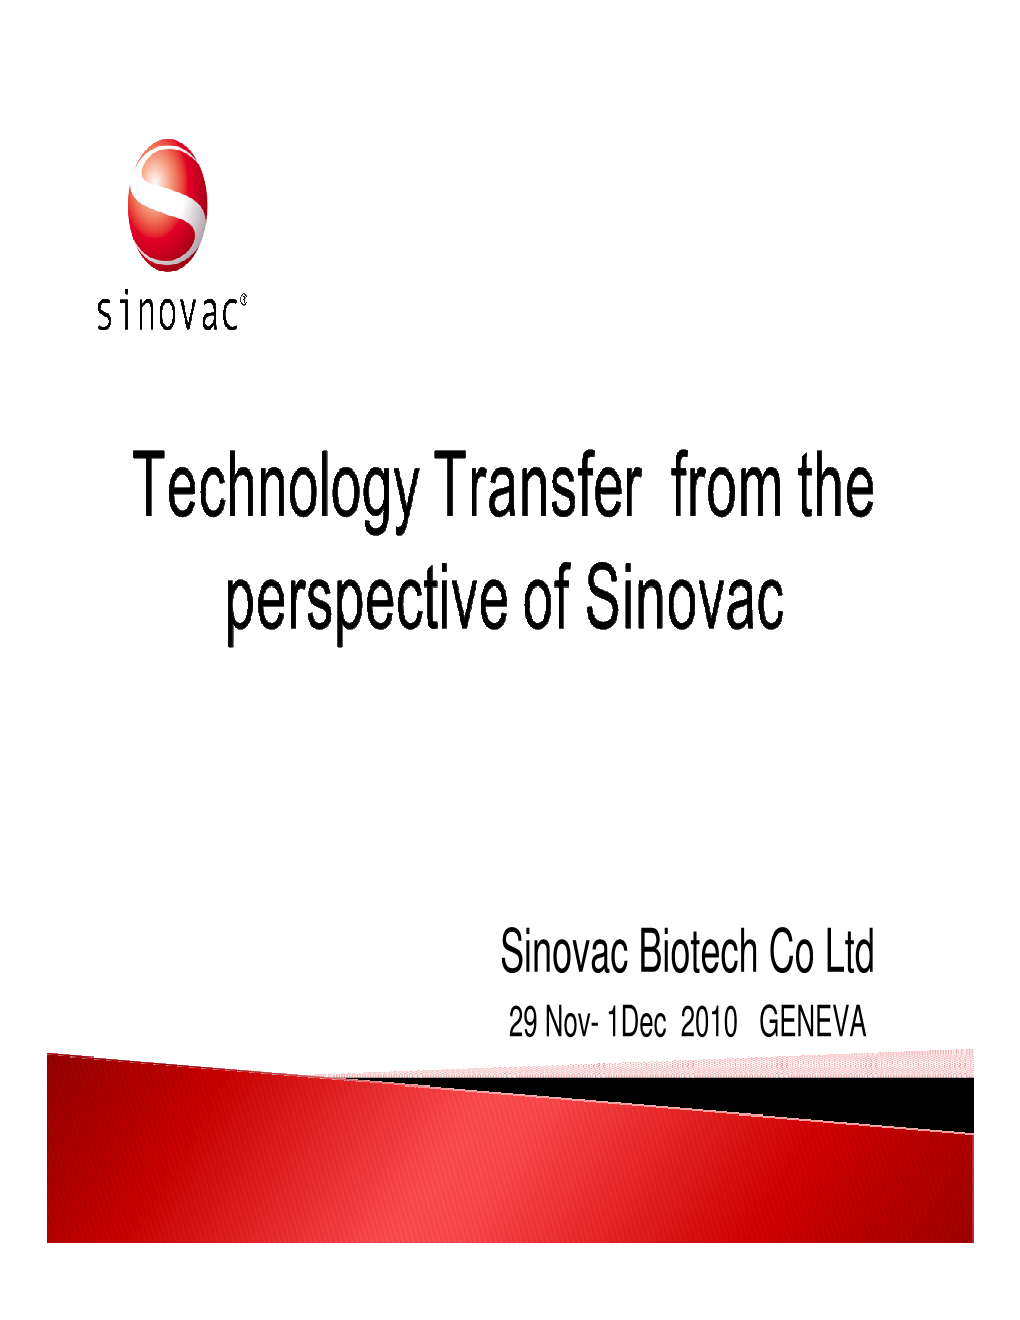 Sinovac Biotech Co Ltd 29 Nov- 1Dec 2010 GENEVA Sinovac Biotech Co Ltd (Nasdaq GM:SVA)